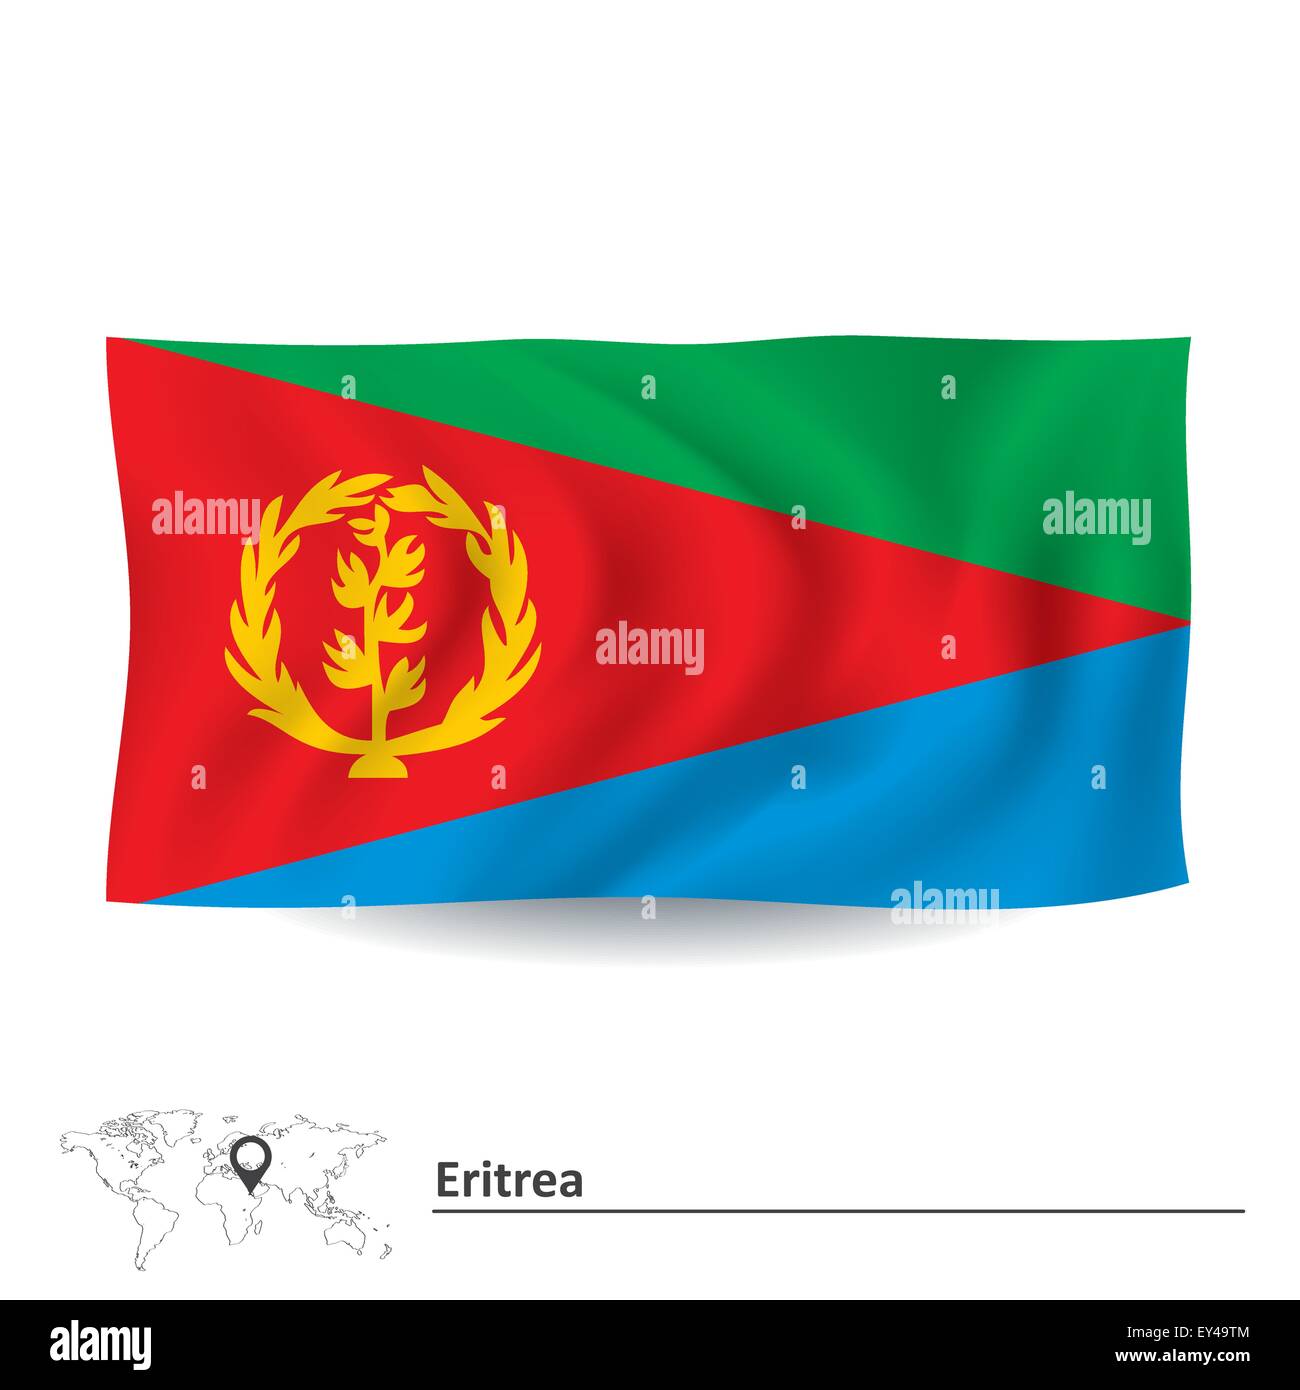 Flag of Eritrea - vector illustration Stock Vector